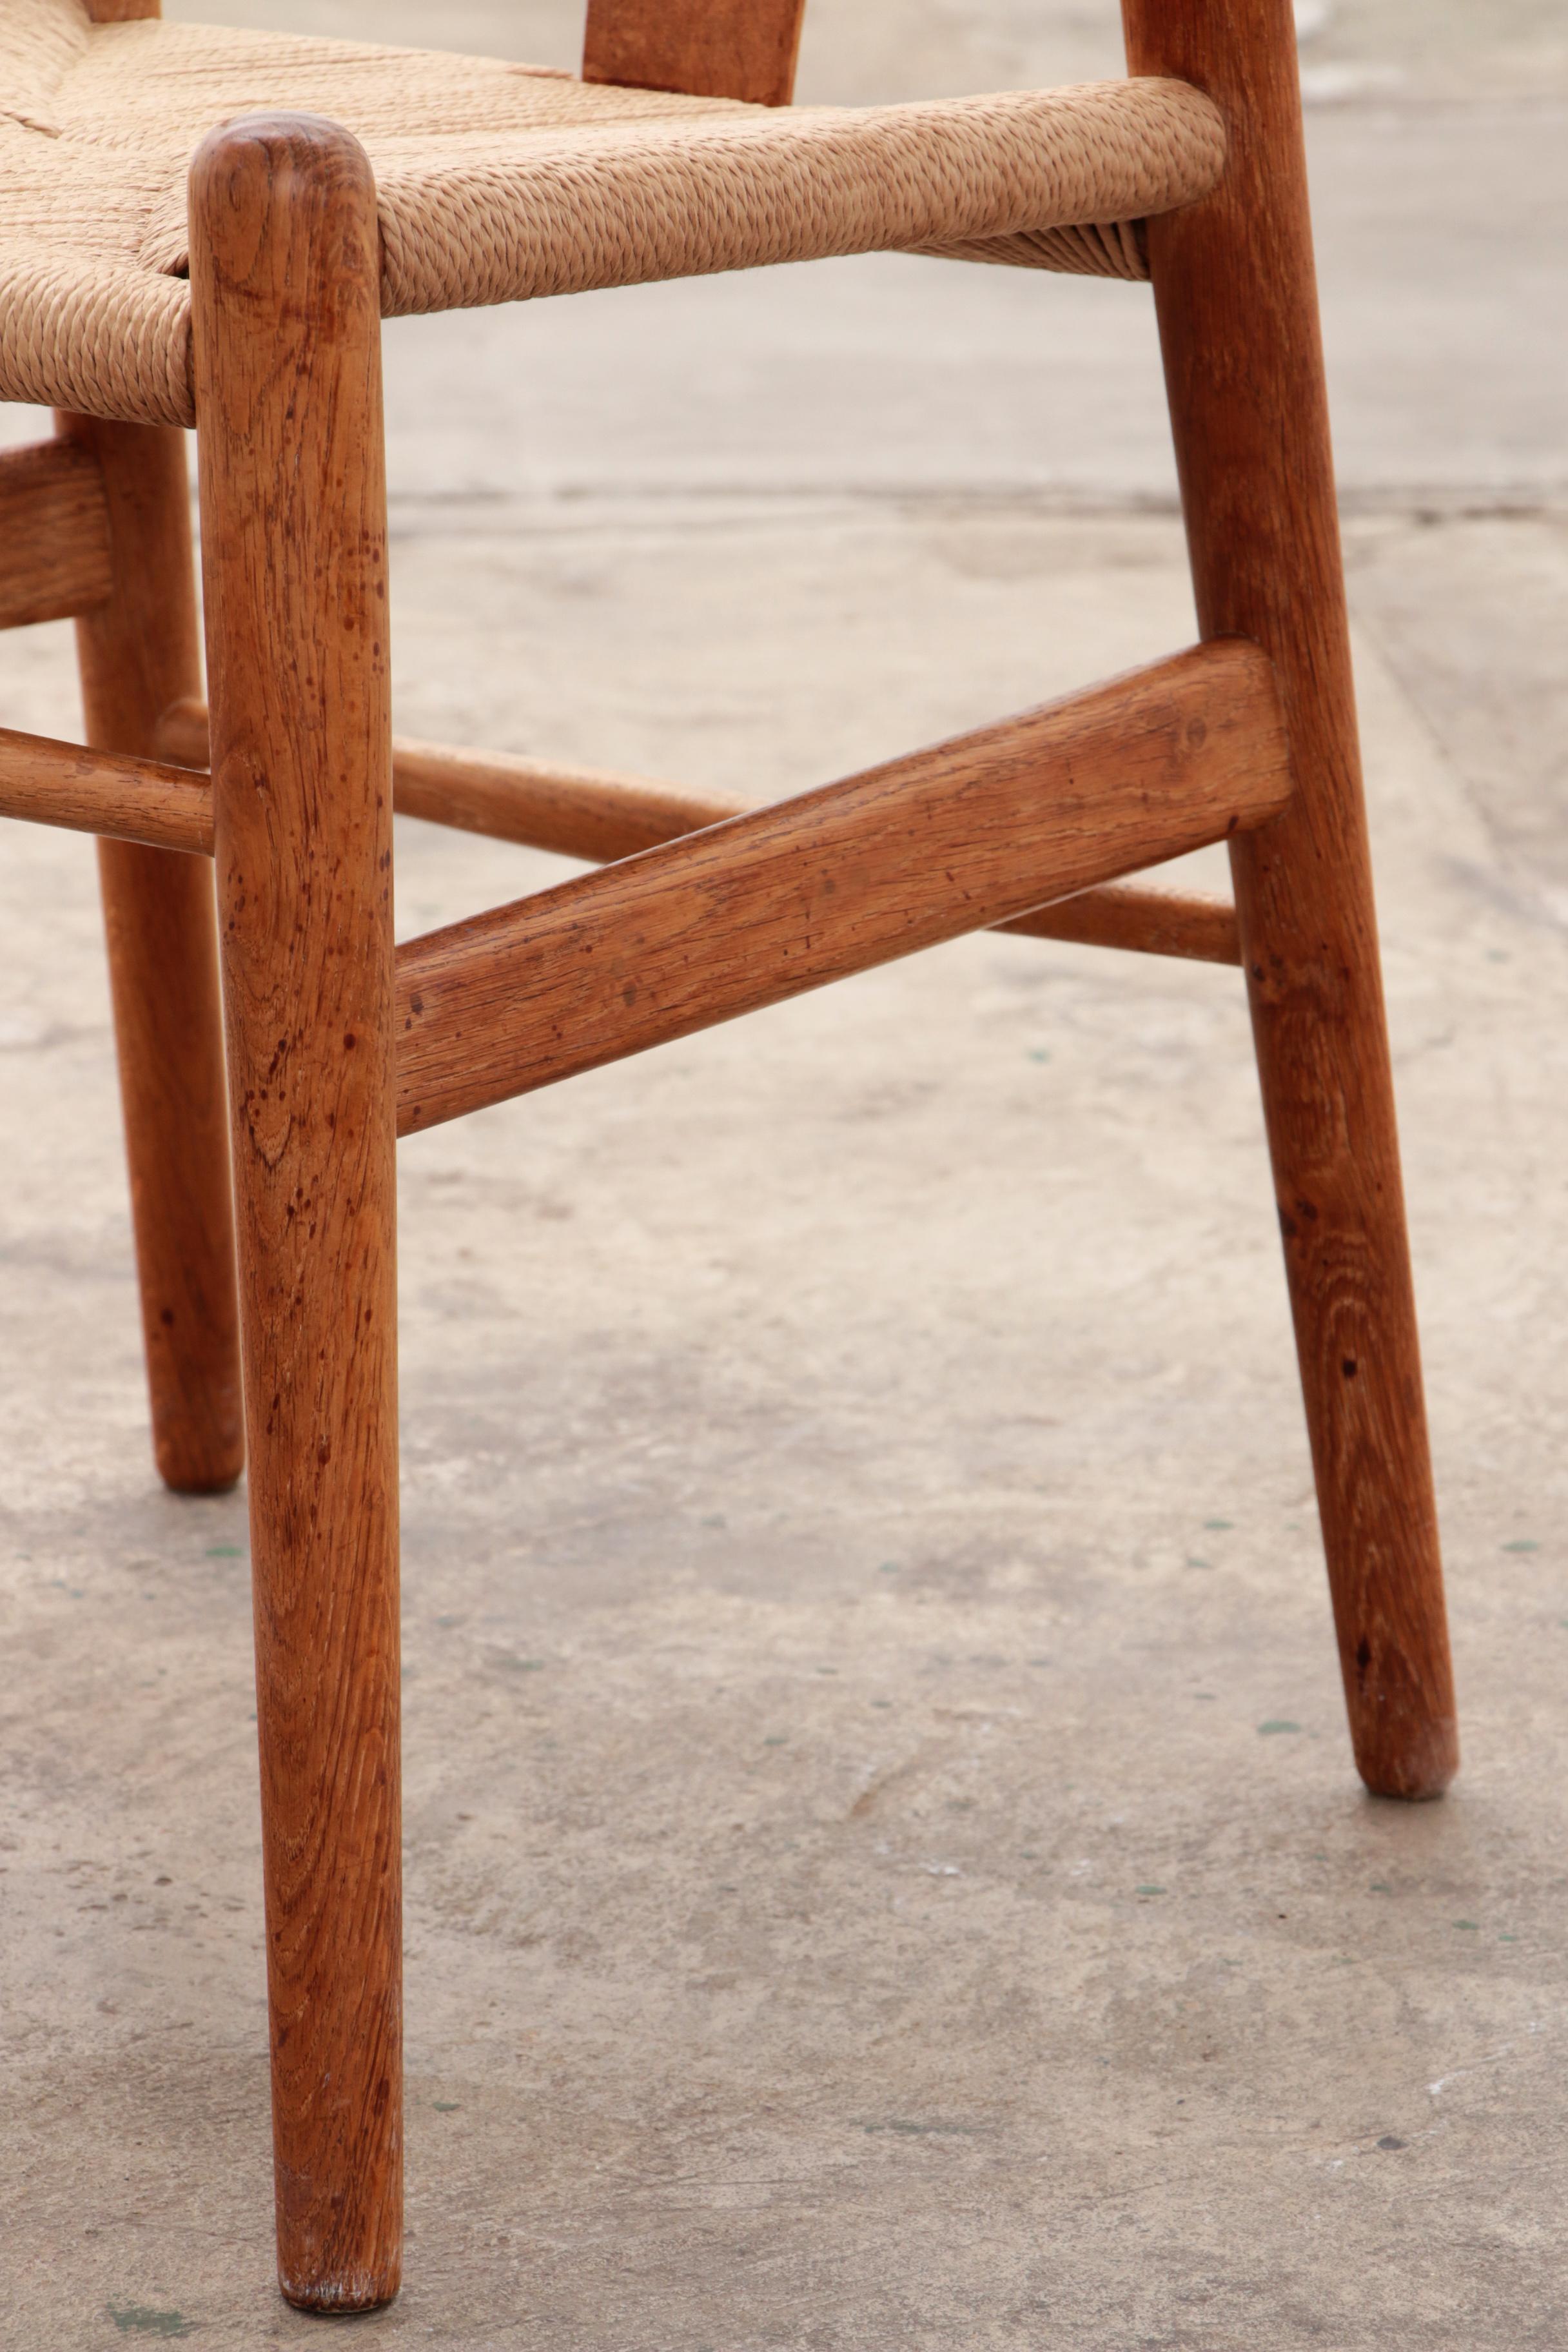 Hans Wegner Oak Wishbone Chairs made by Carl Hansen&Son 2